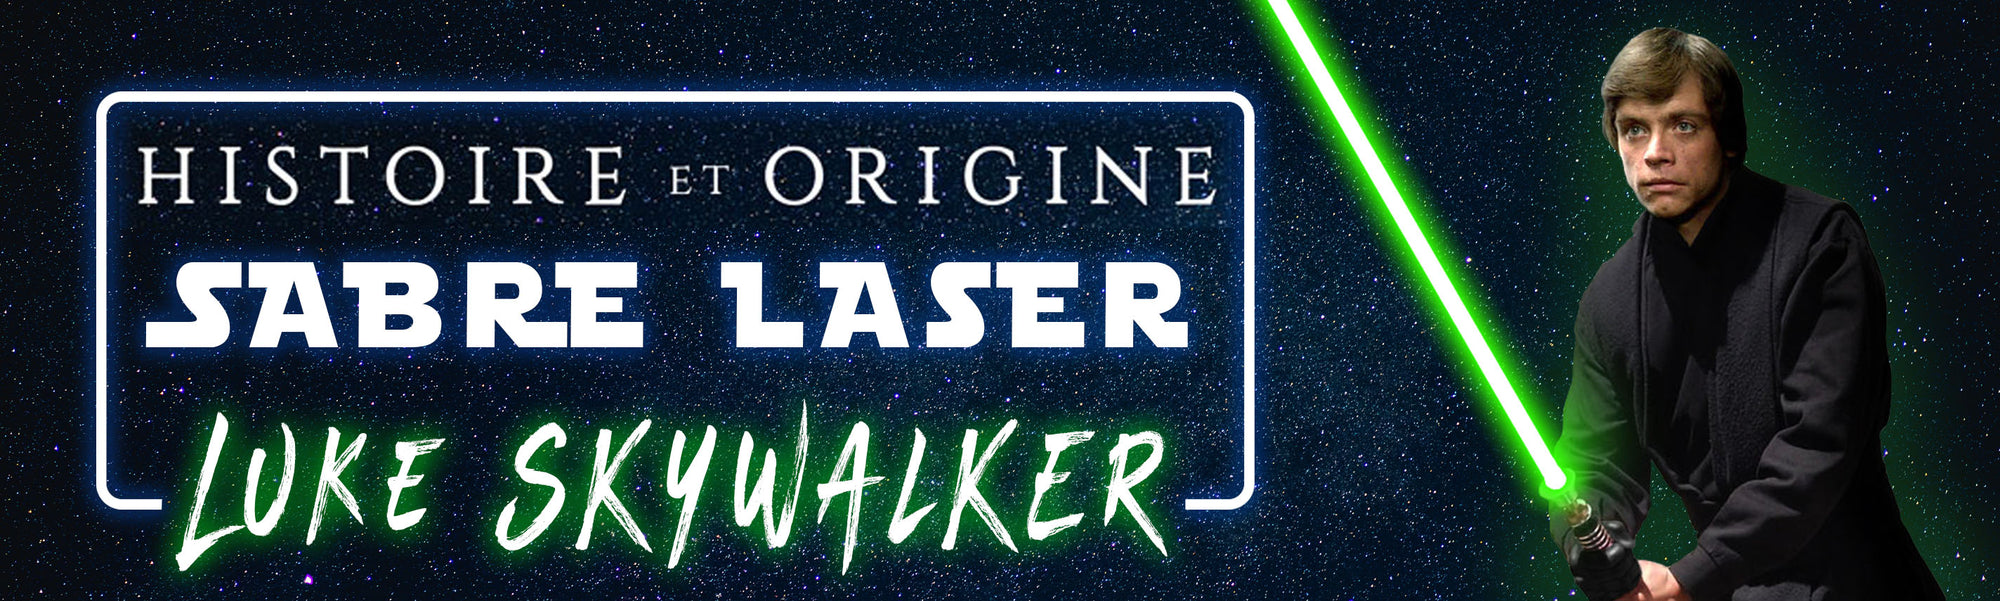 Sabre laser vert de Luke Skywalker